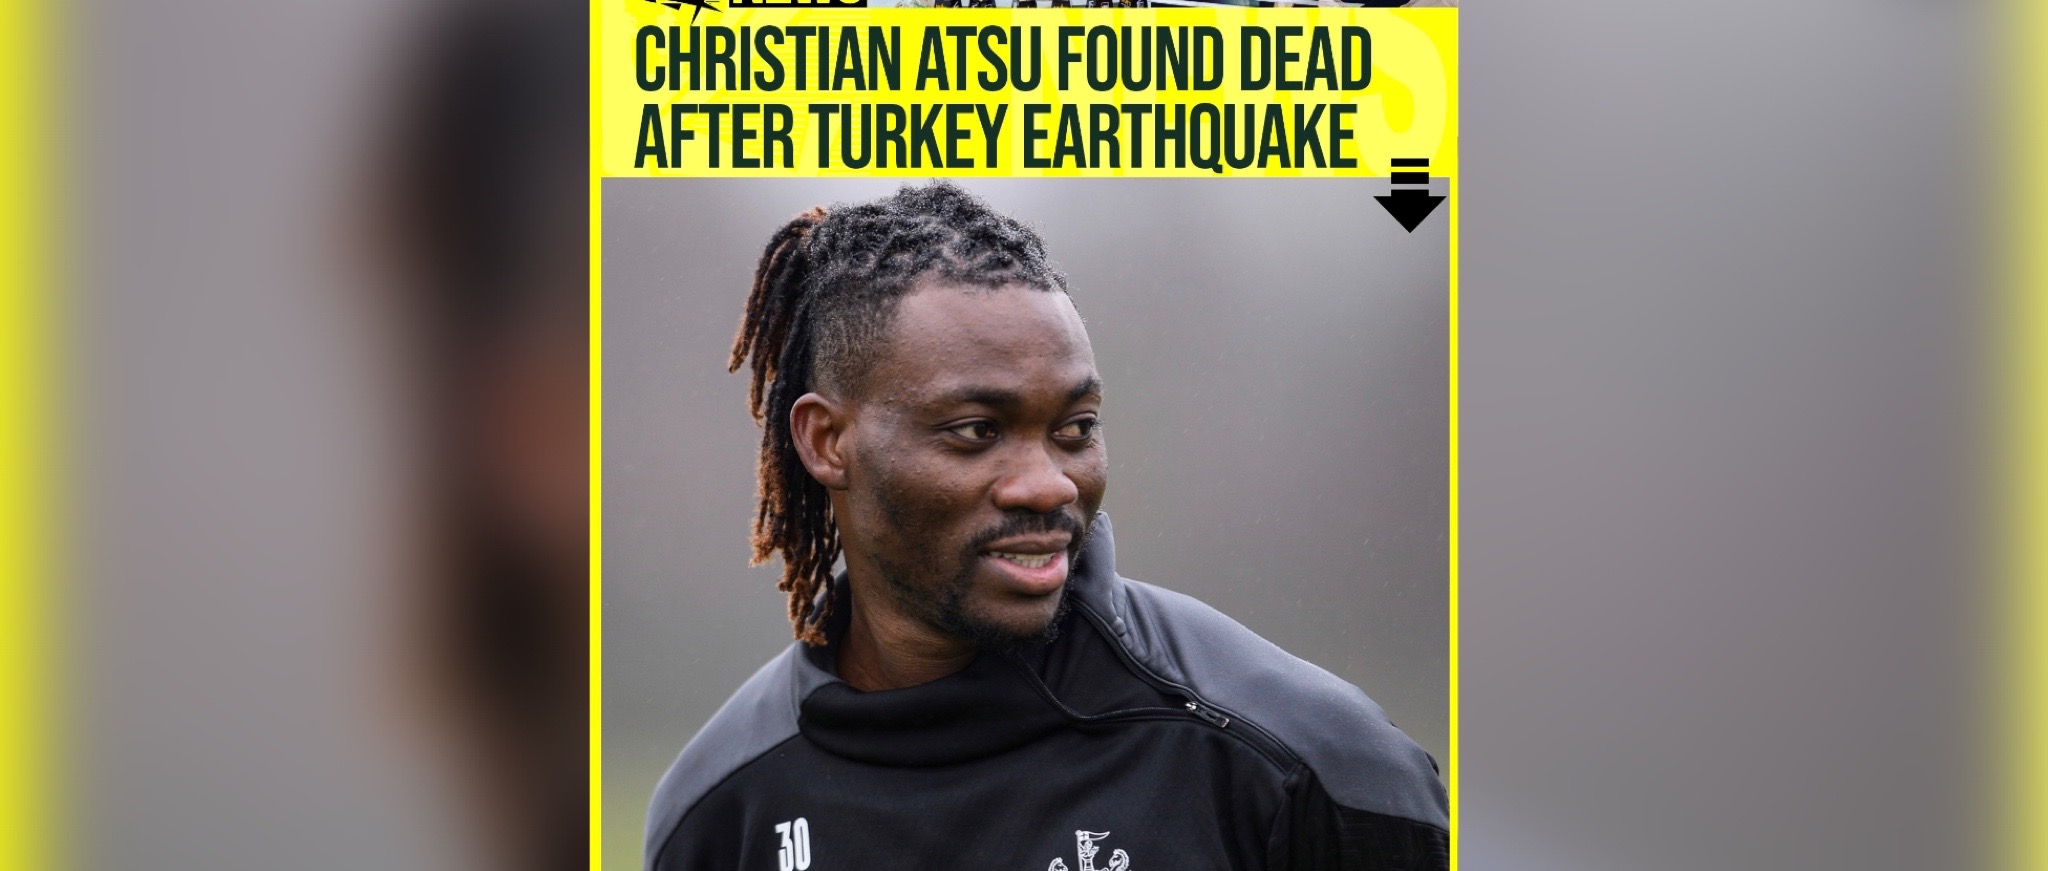 Christian Atsu, Ghana, Chelsea,Newcastle, died, earthquake,Turkey